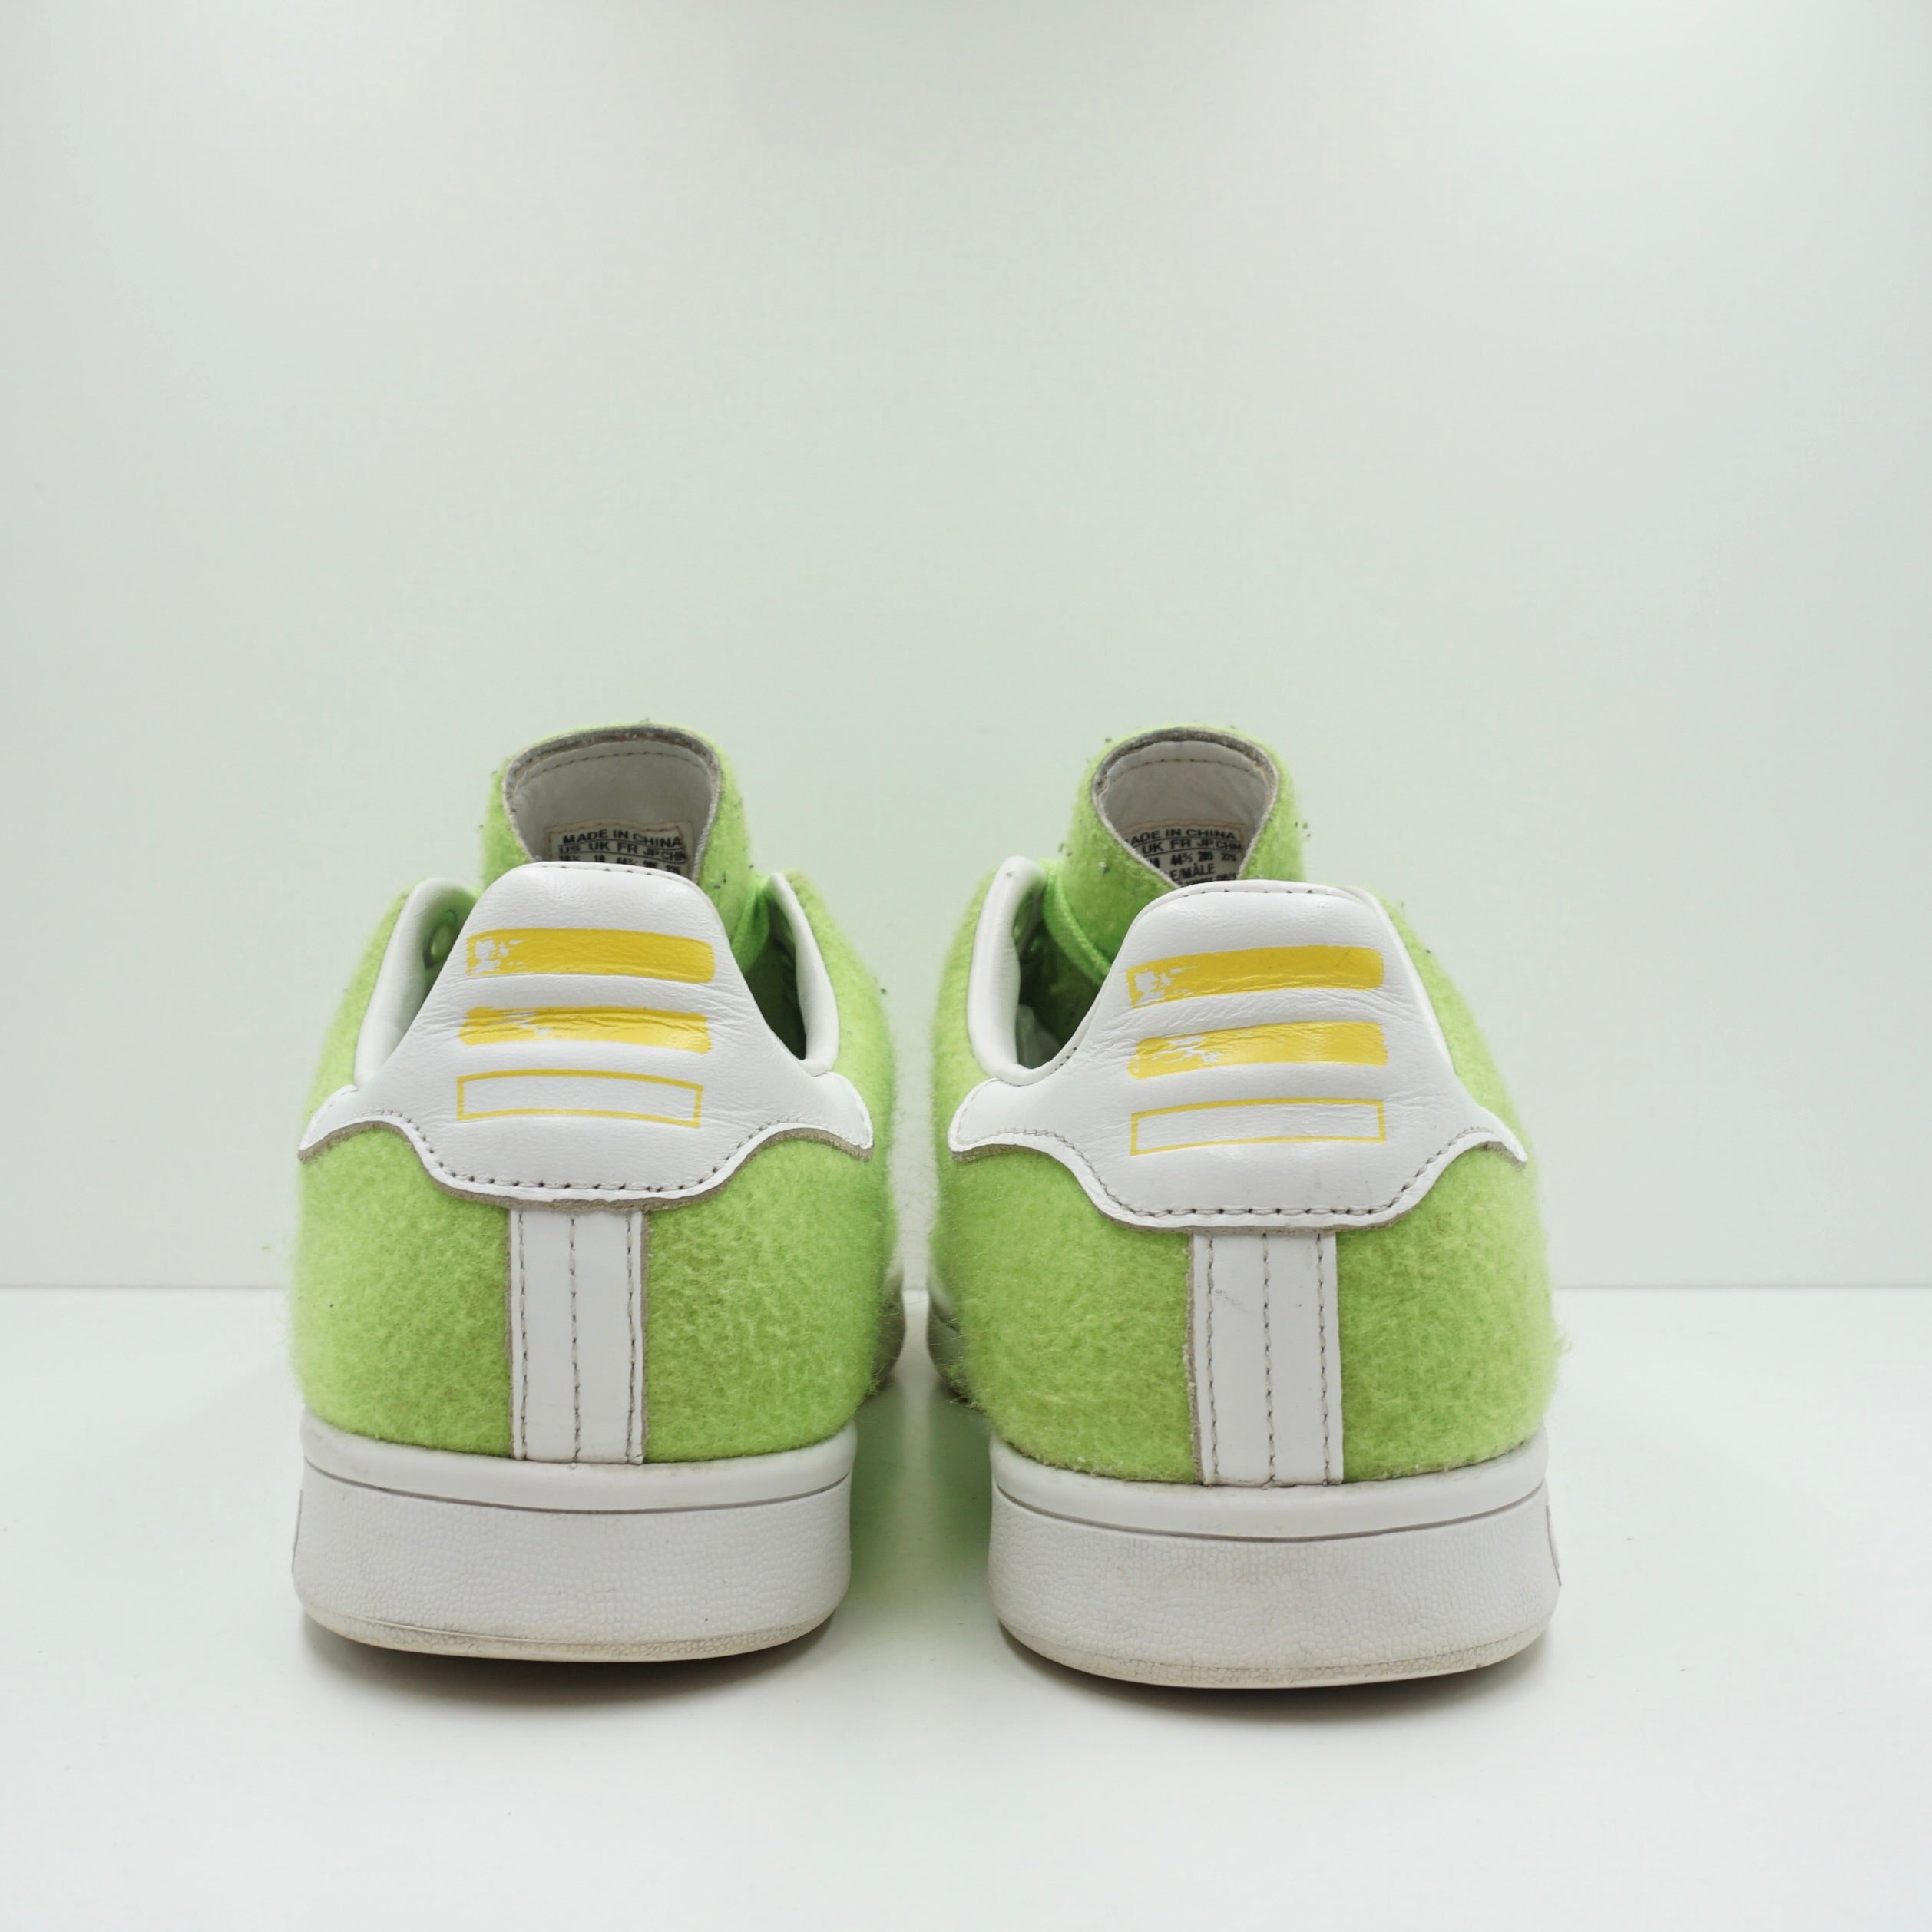 Adidas Stan Smith Tennis Shoe